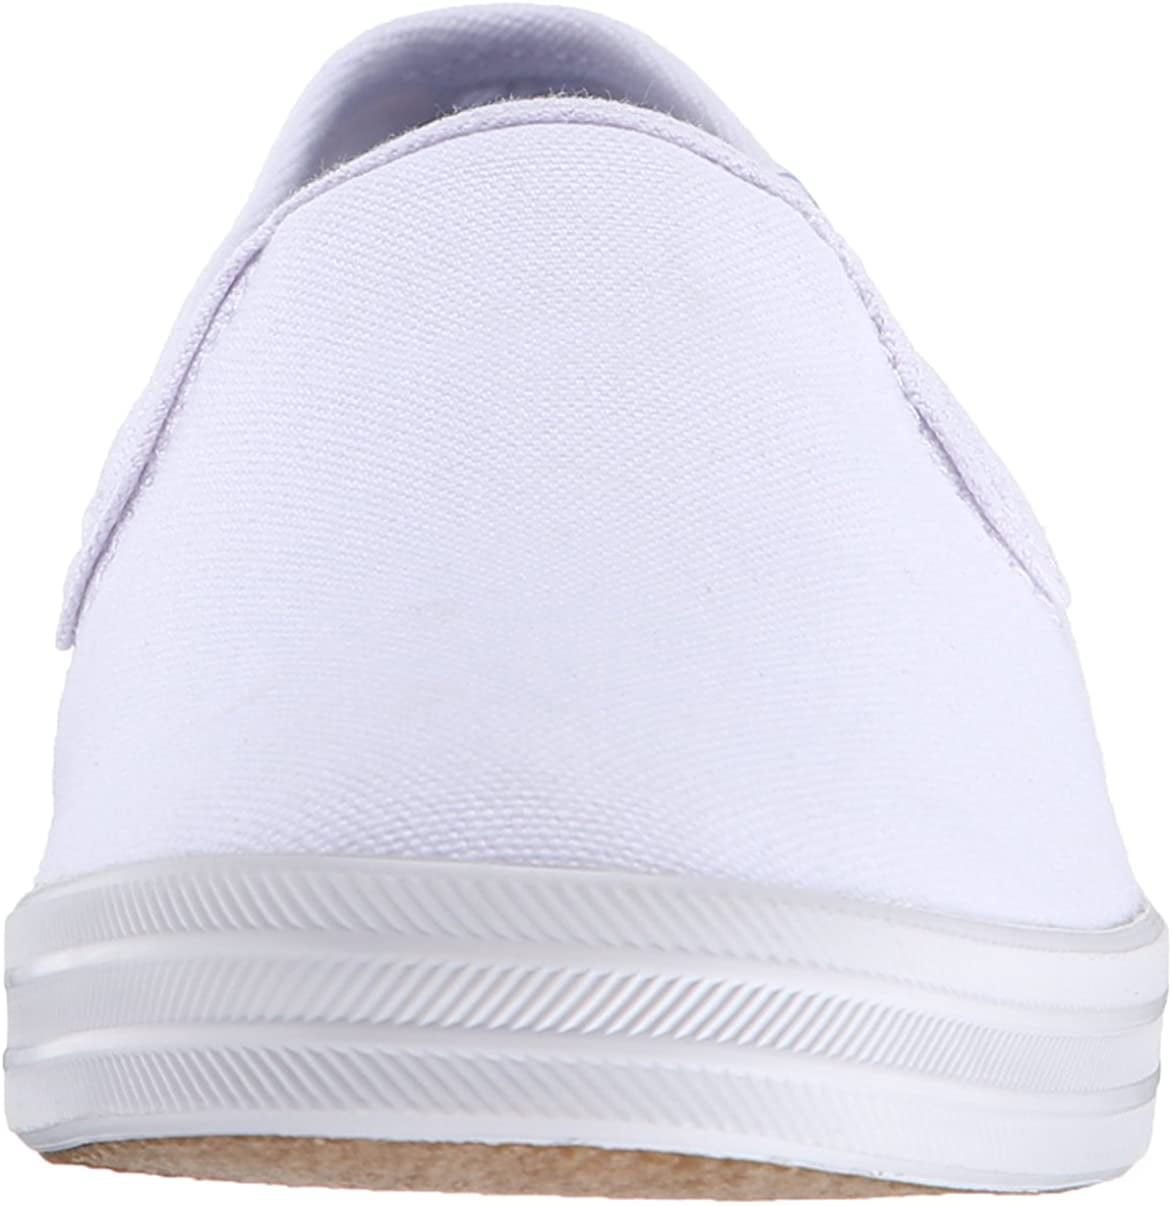 Keds Women's Champion Canvas Slip-On Sneaker, White, 7 M US | Walmart ...